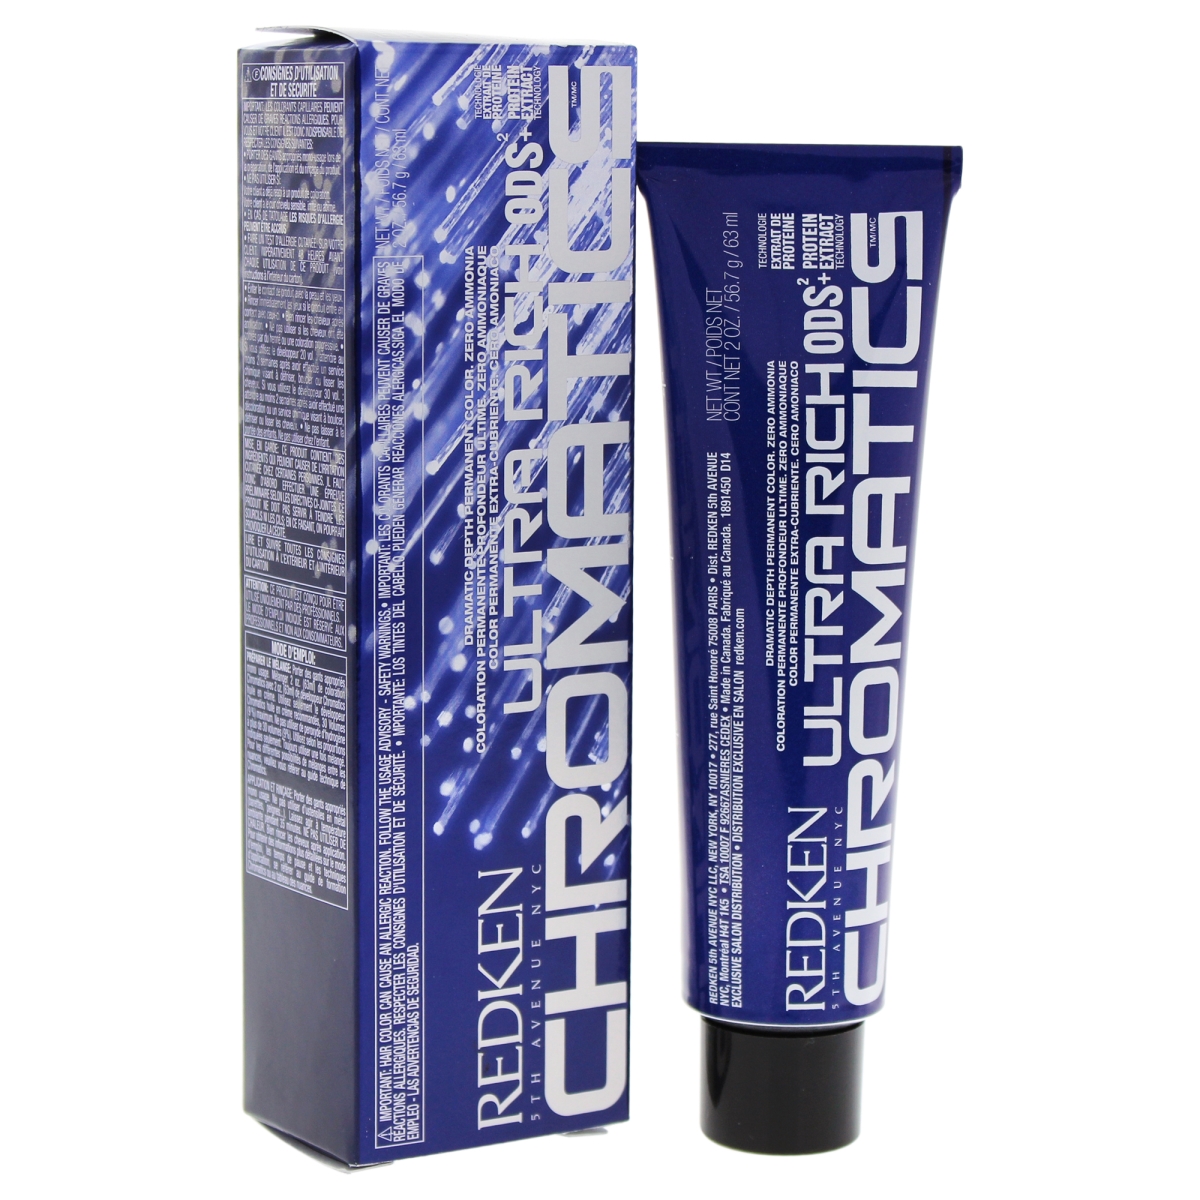 U-hc-11821 Chromatics Ultra Rich 2 Oz Hair Color For Unisex - 4nn Natural